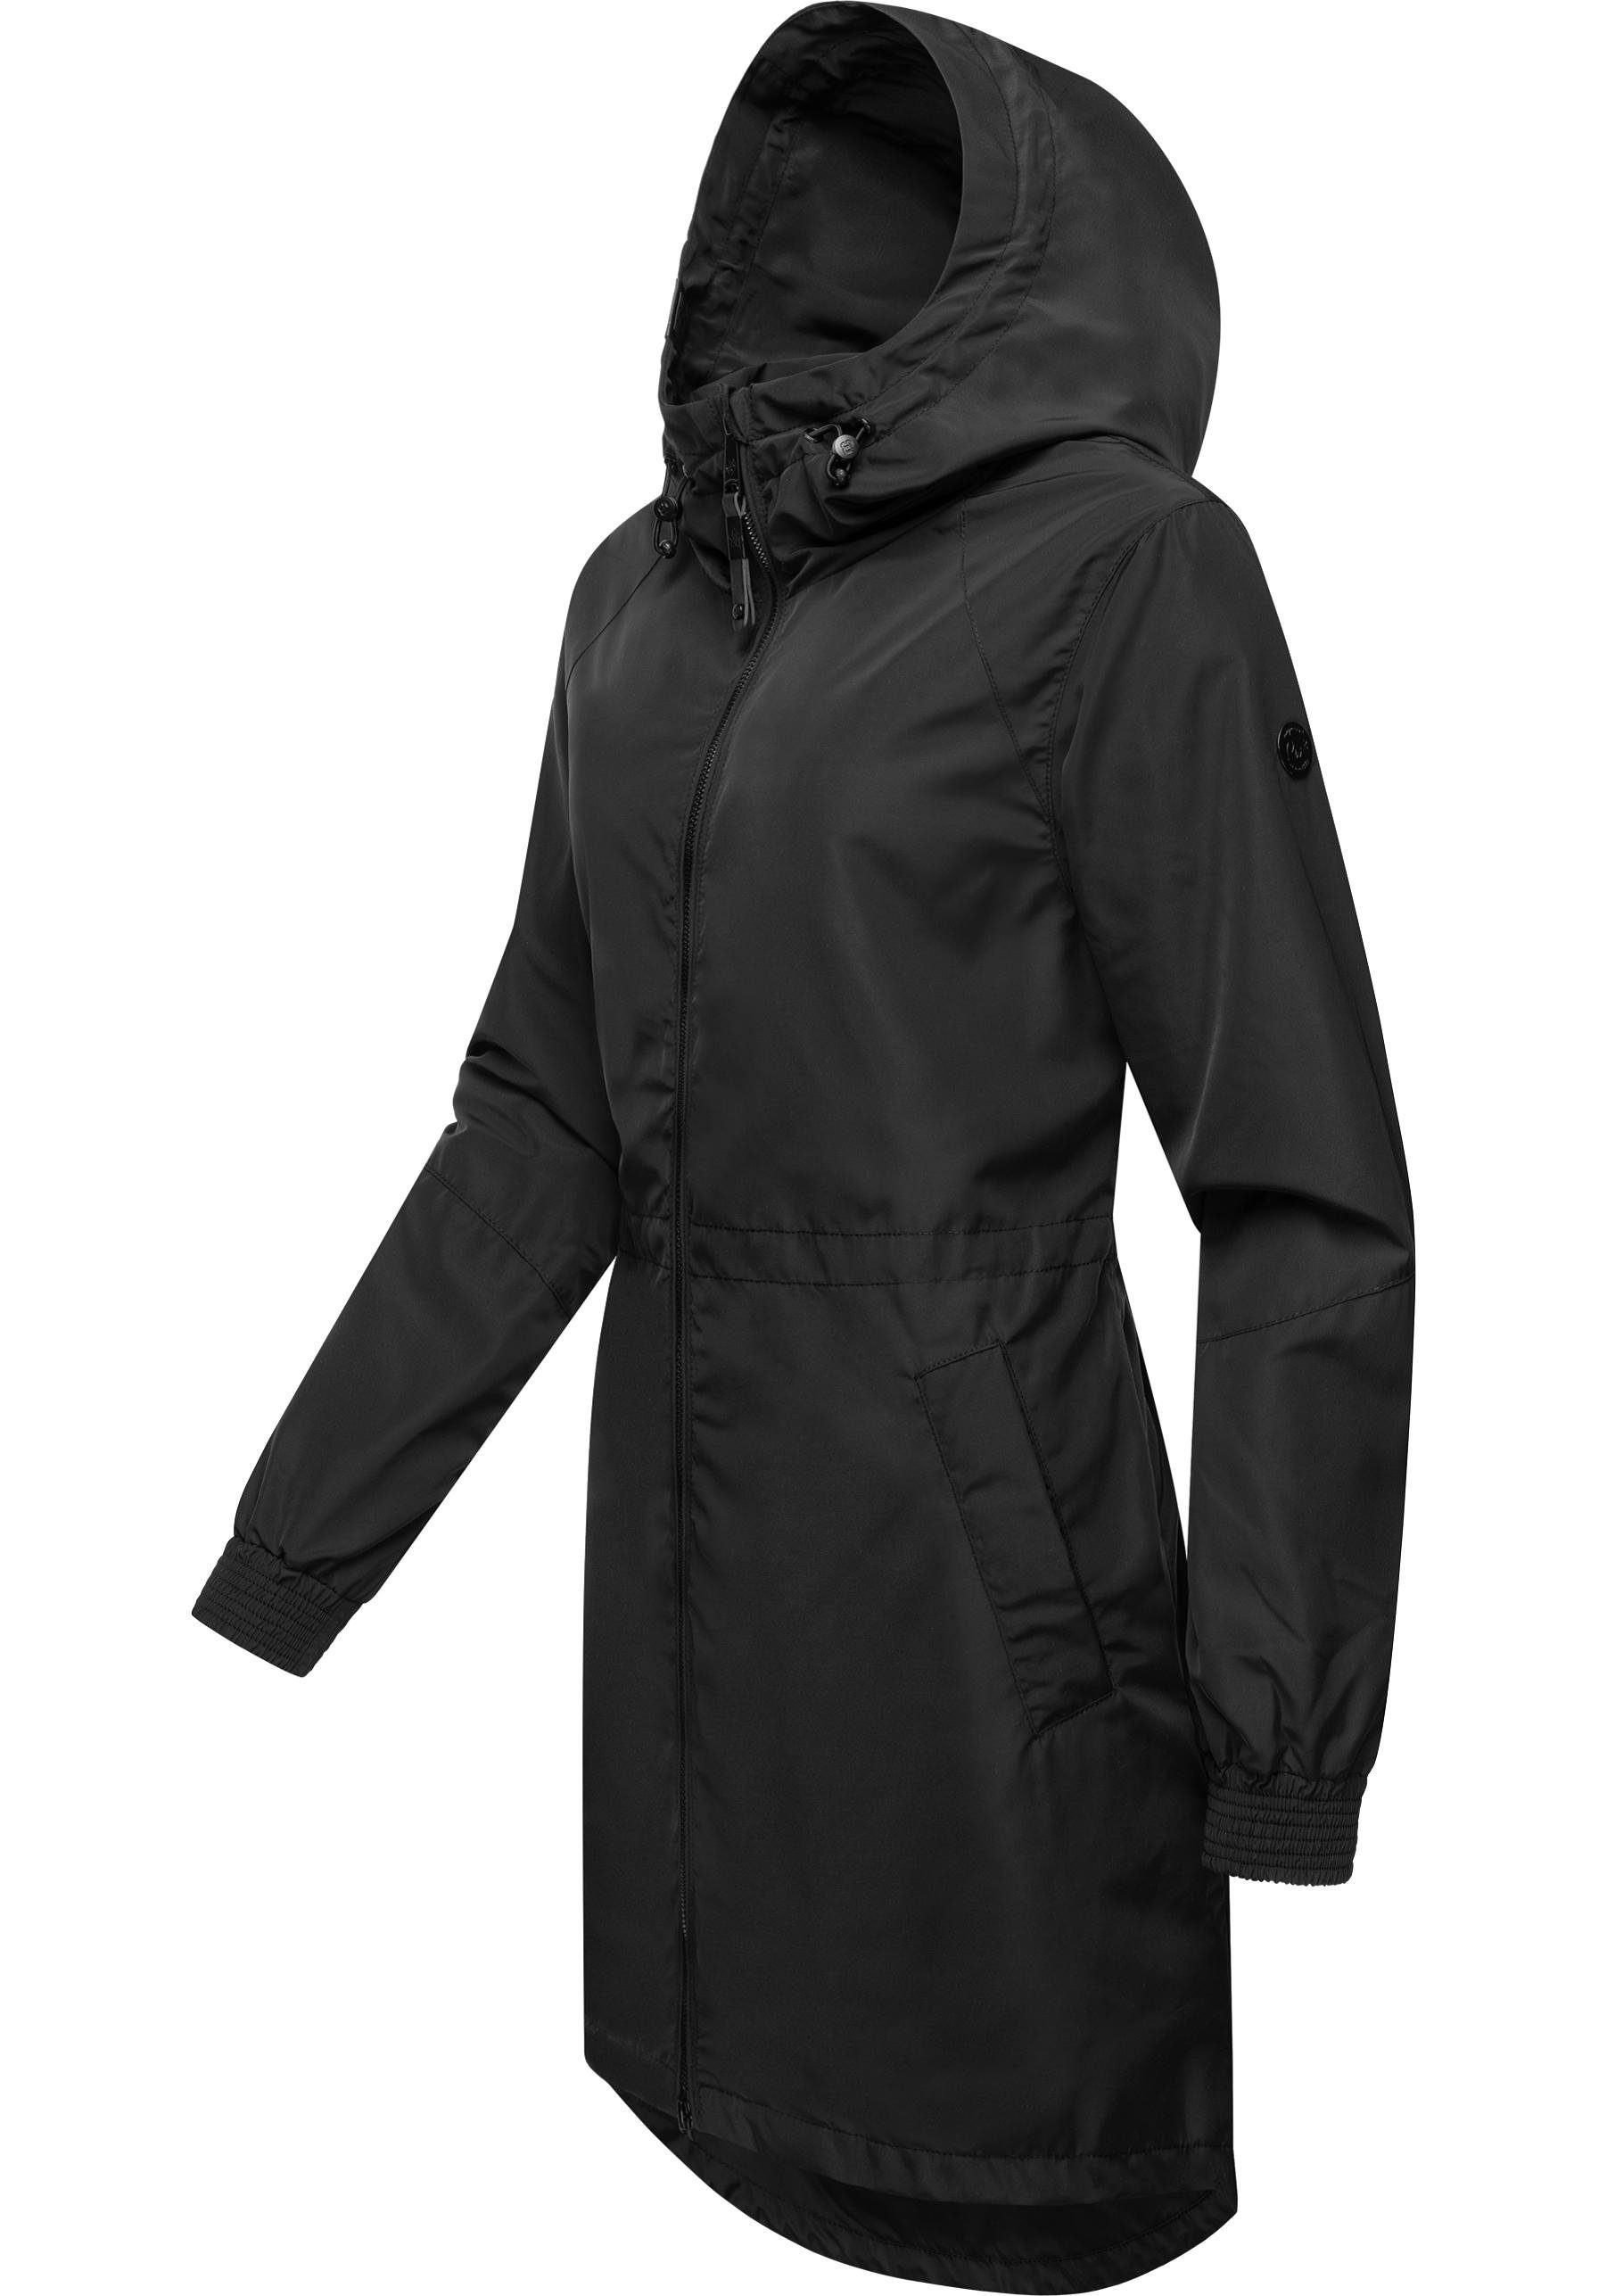 Outdoorjacke Bronja stylischer Übergangsmantel schwarz Ragwear unifarbener